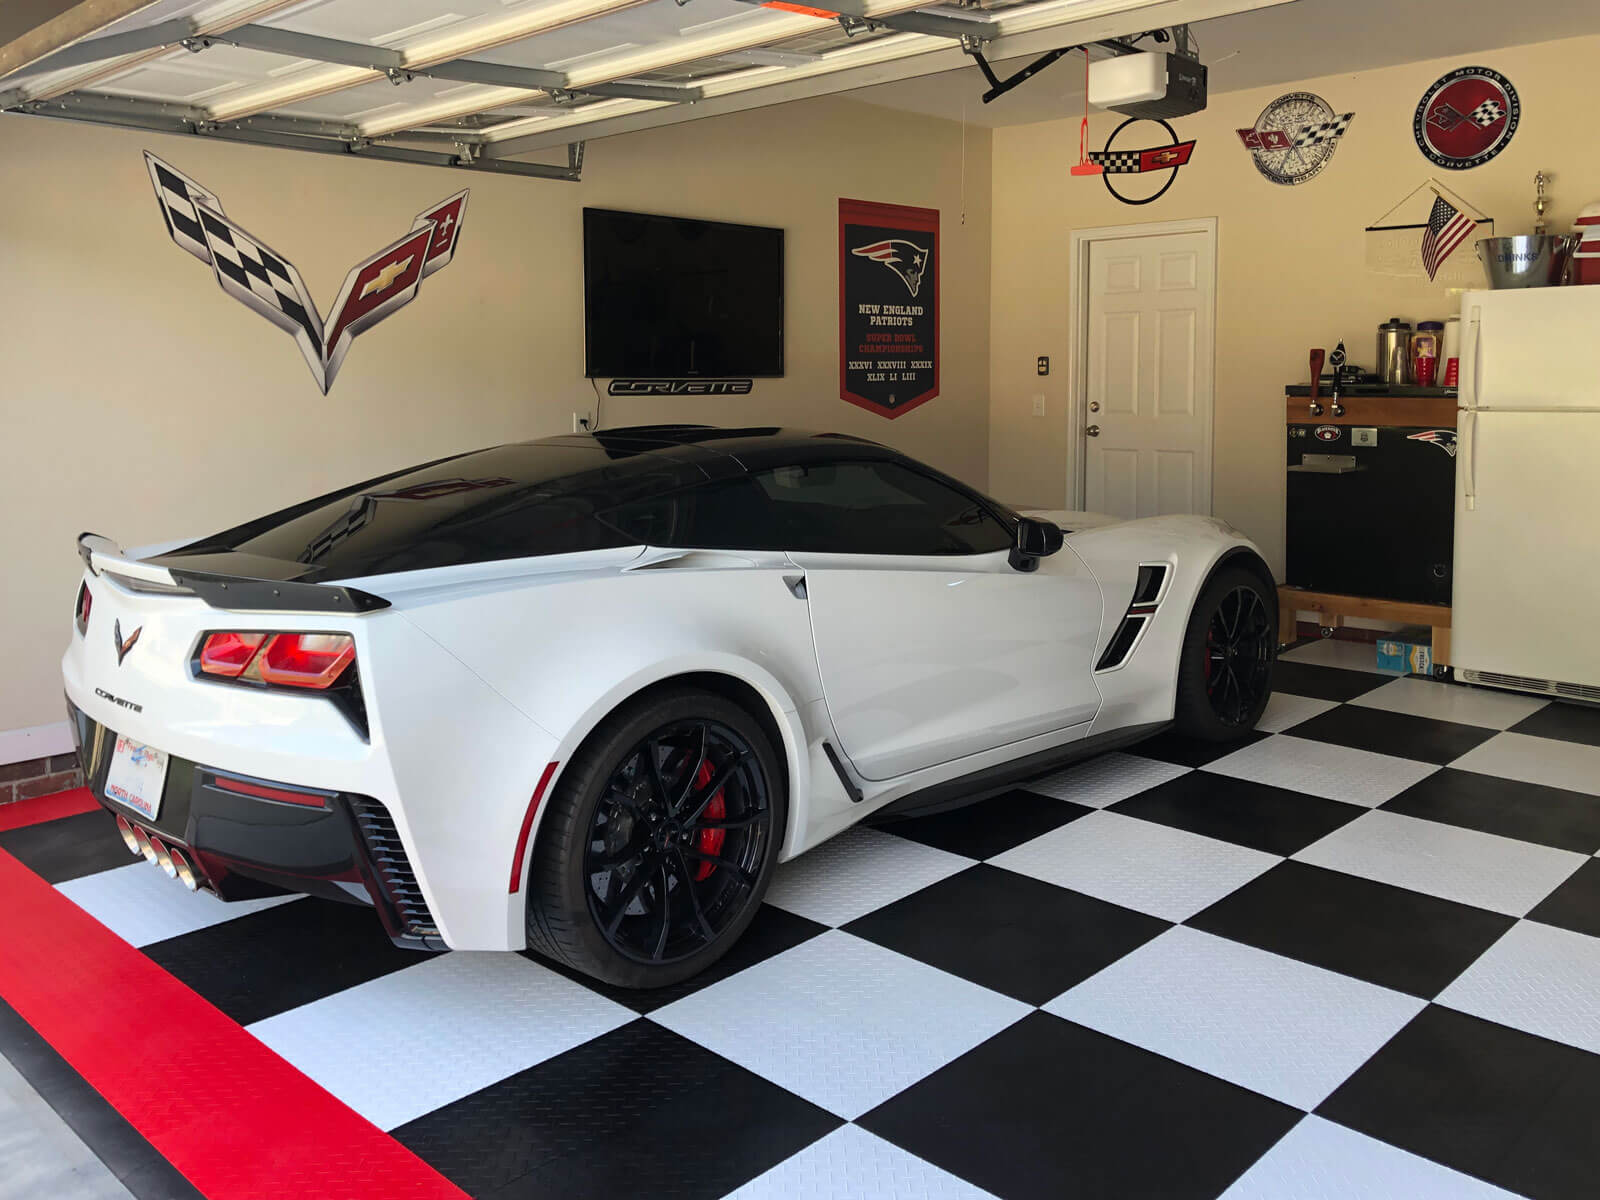 Eric's RaceDeck Diamond Corvette Garage